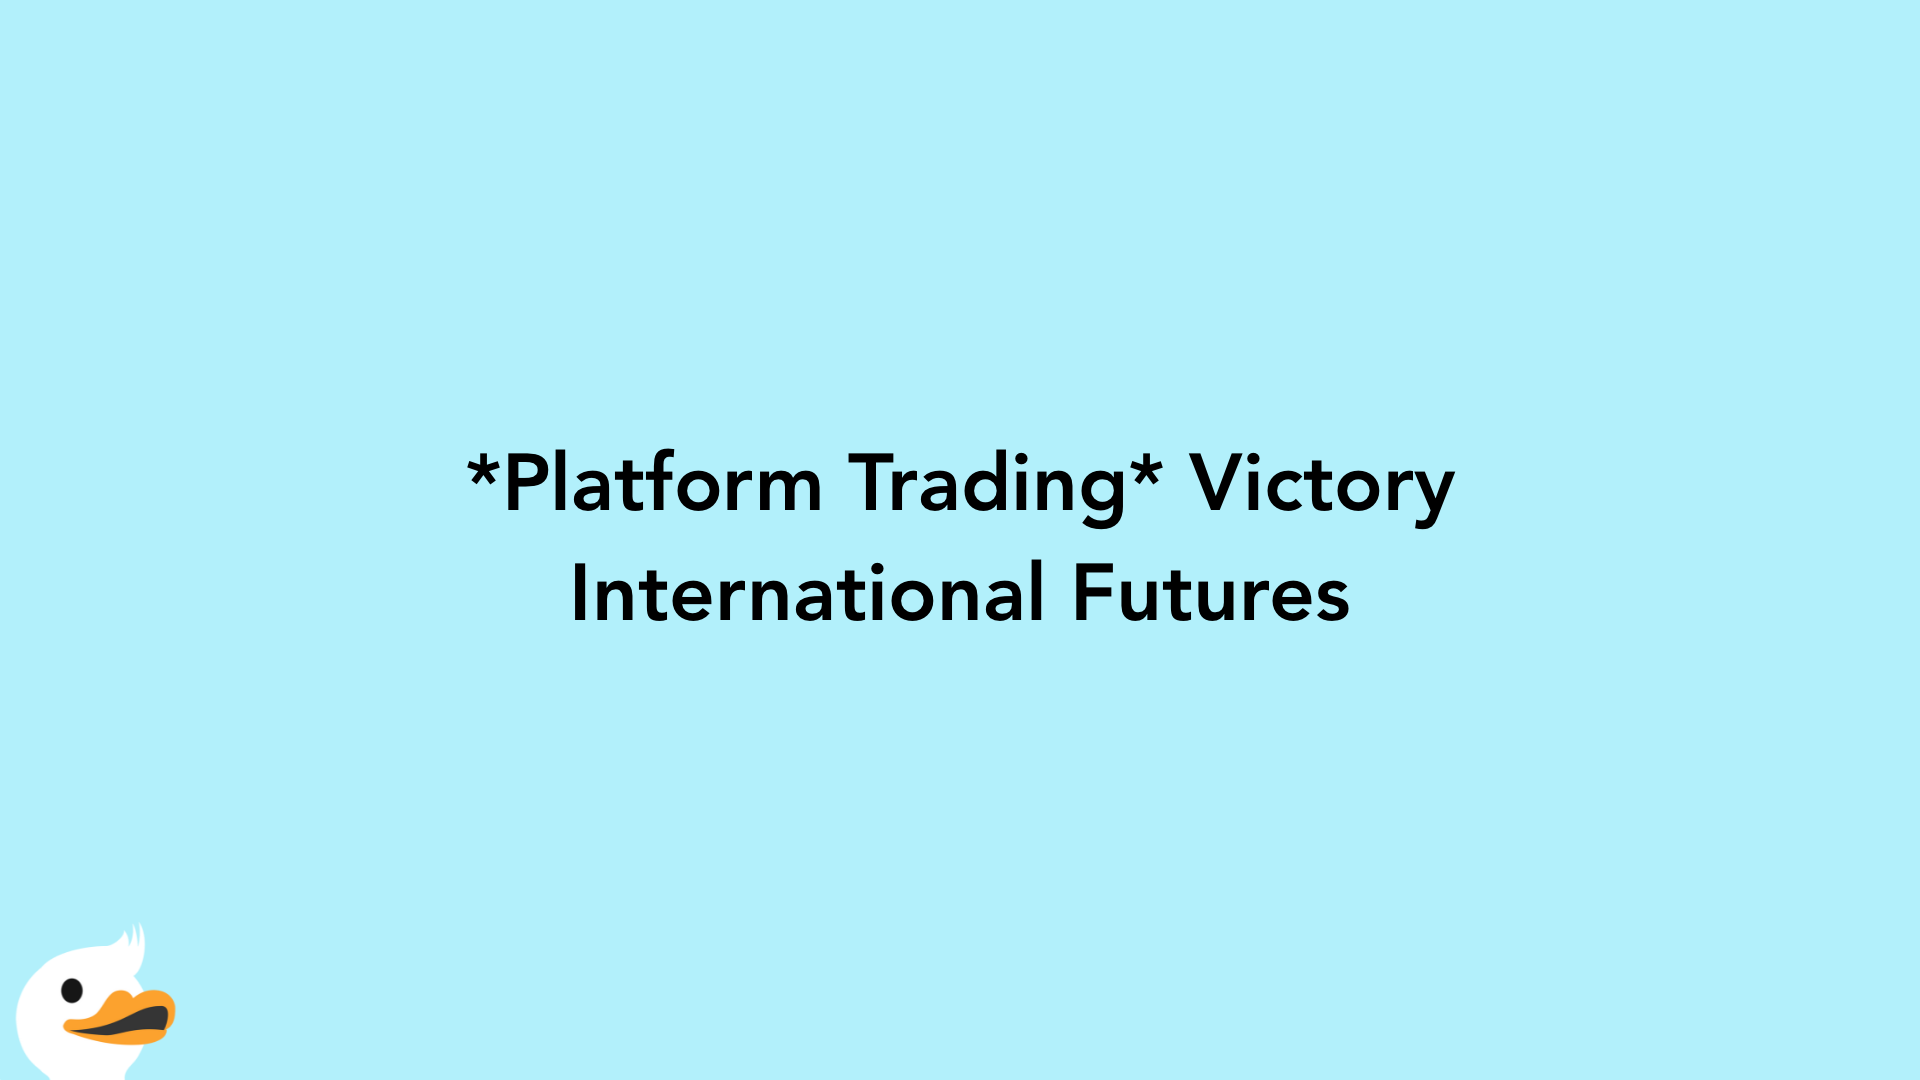 Platform Trading Victory International Futures